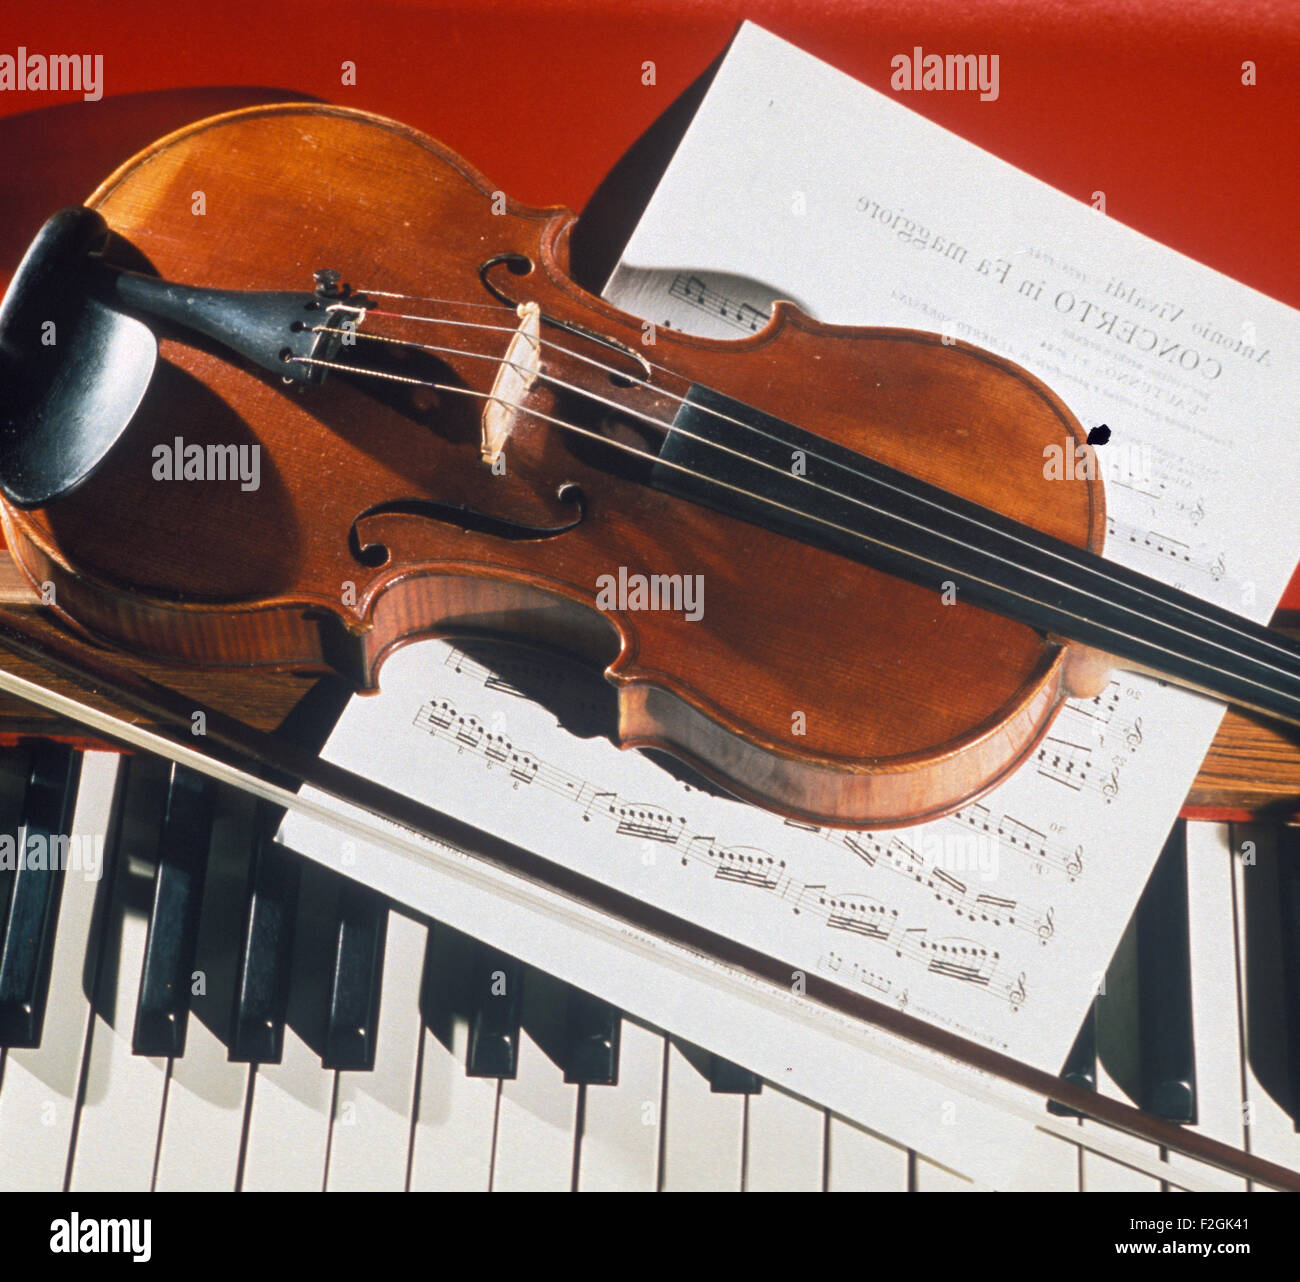 Imagen de música clásica. Foto de prensa Combi Foto de stock